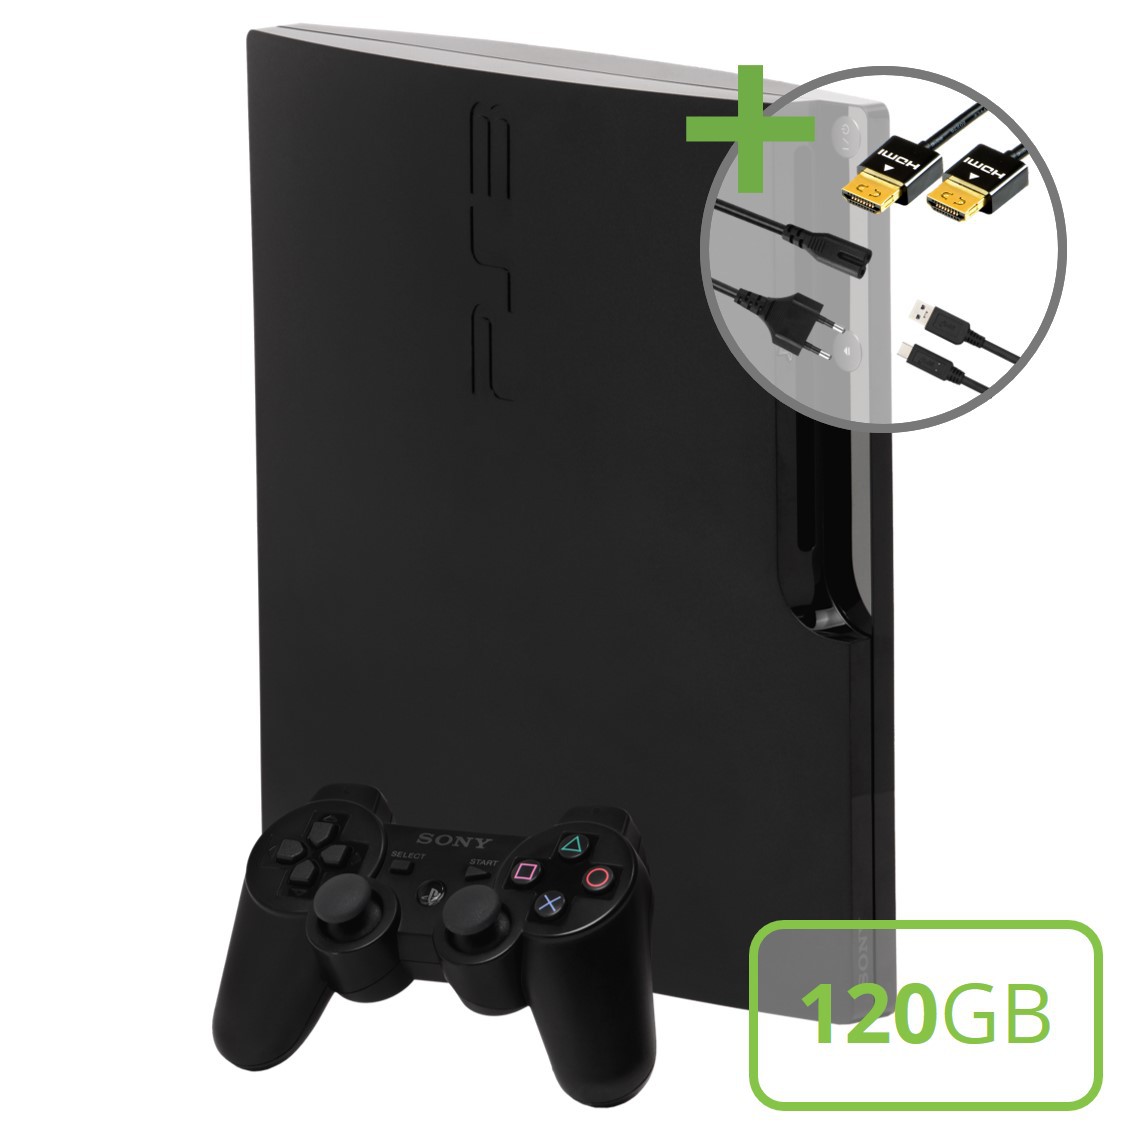 Sony PlayStation 3 Slim (120GB) Starter Pack - DualShock Edition - Playstation 3 Hardware - 2